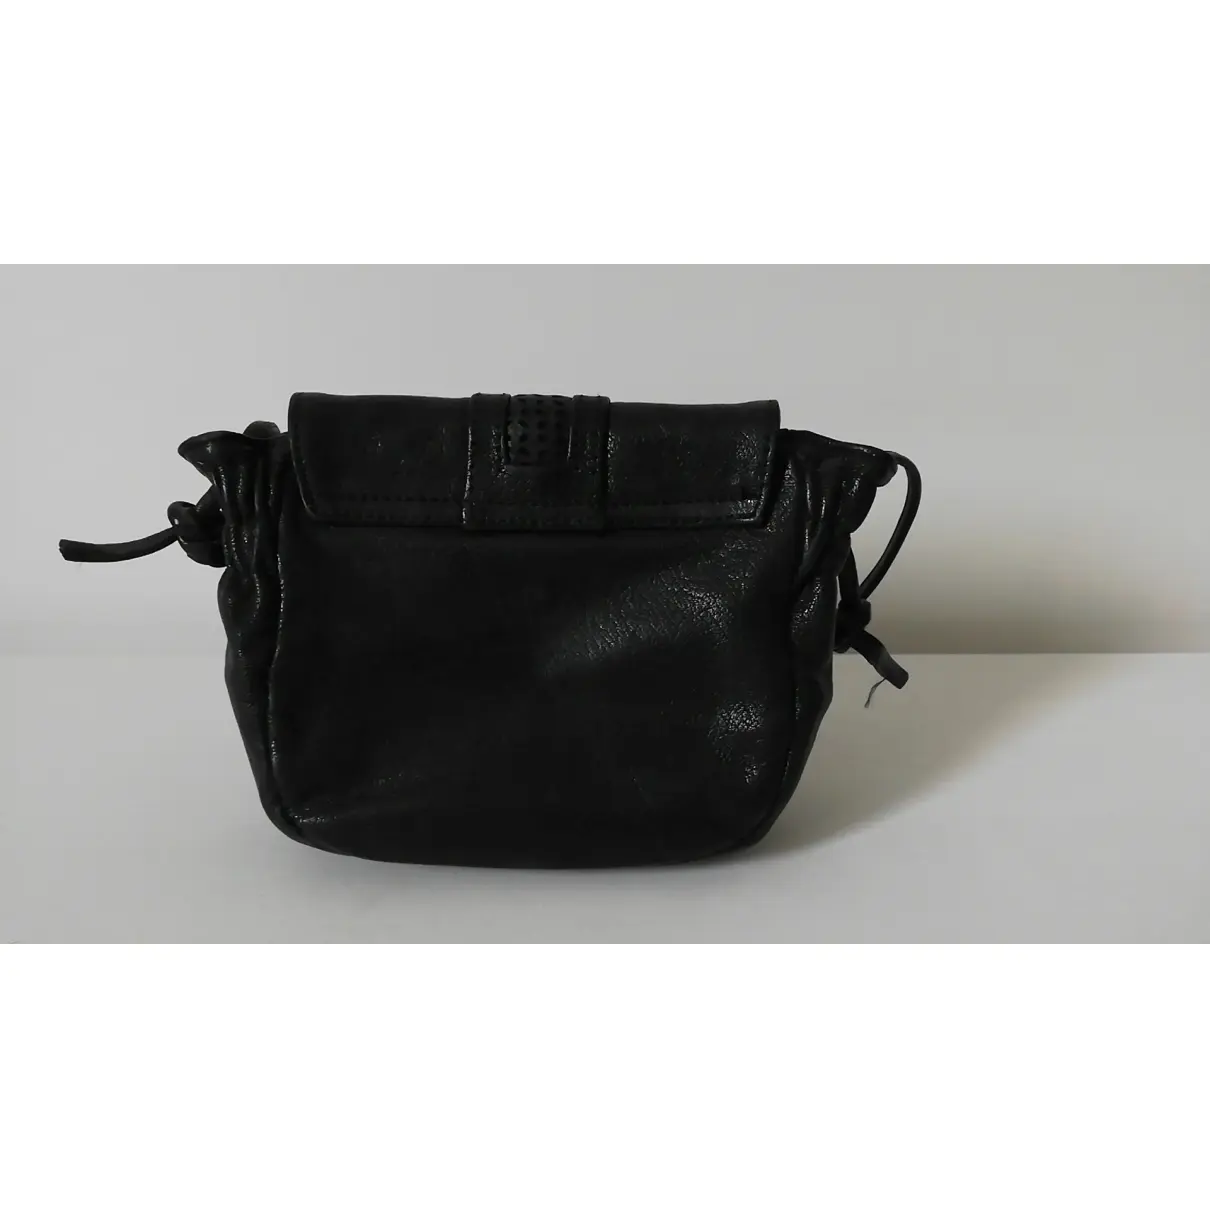 Buy Brontibay Leather handbag online